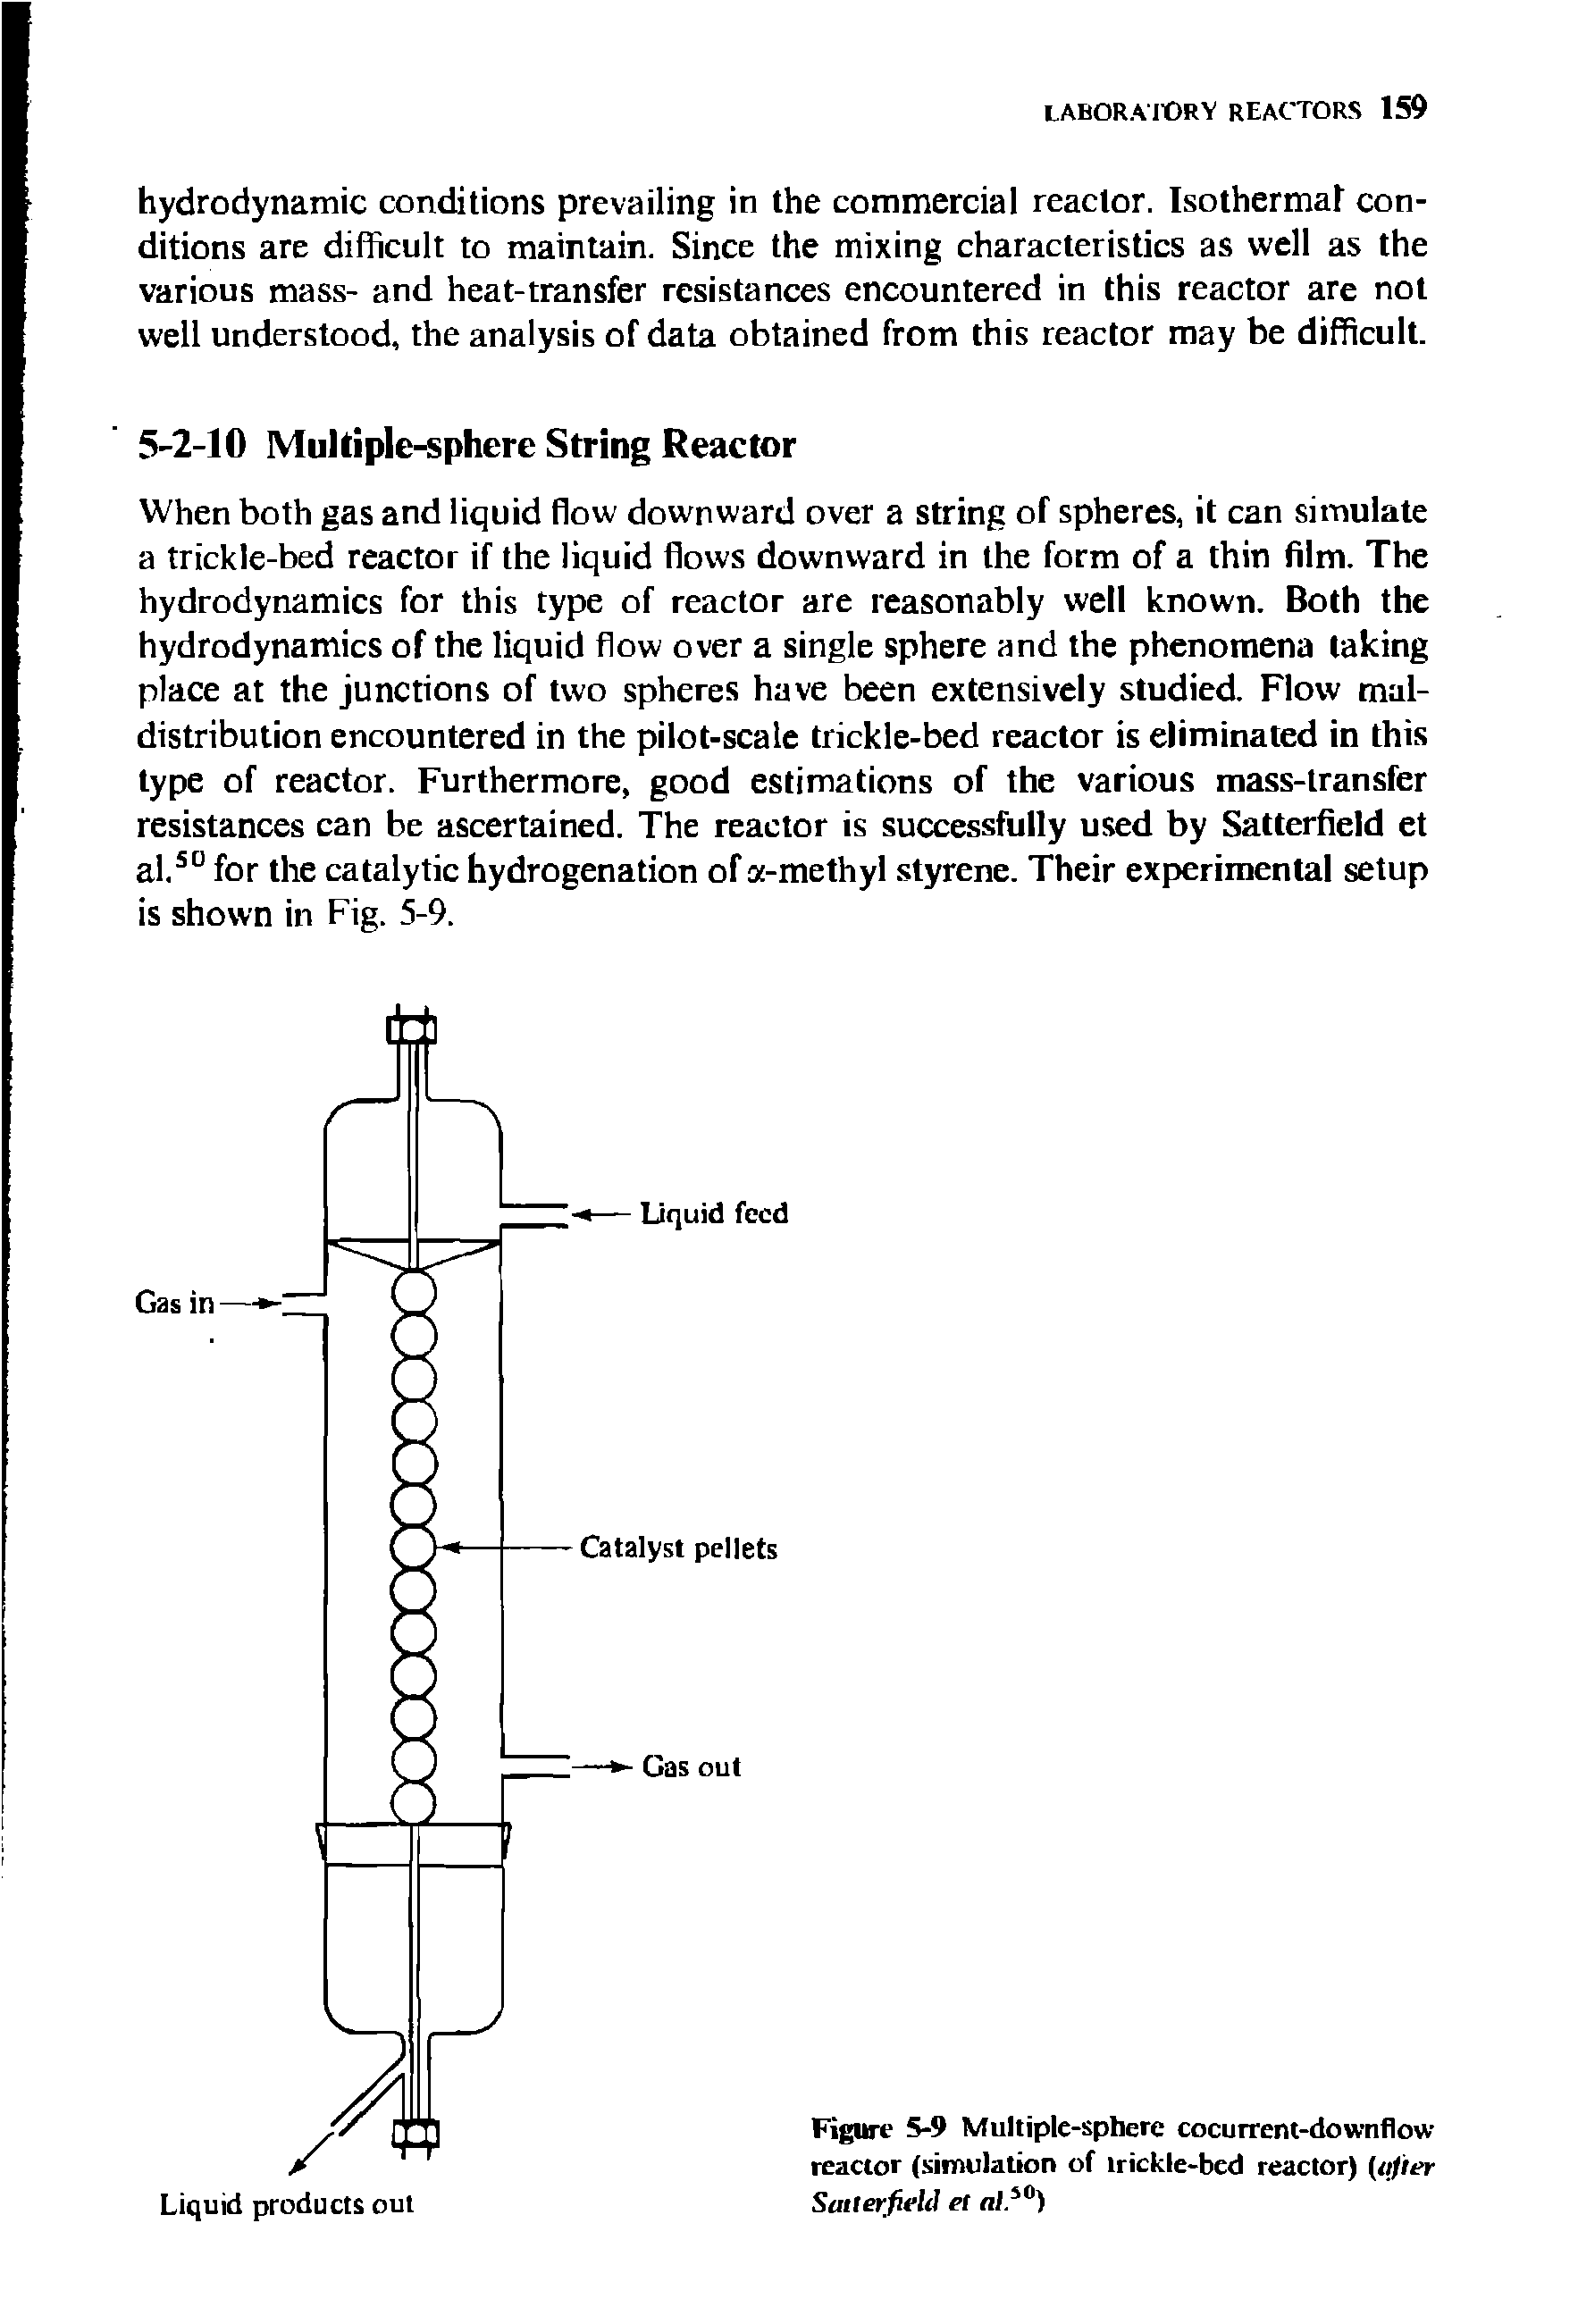 Figure 5-9 Multiple-sphere cocurrent-downflow reactor (simulation of irickle-bcd reactor) lifter Satterfield et al.i0)...